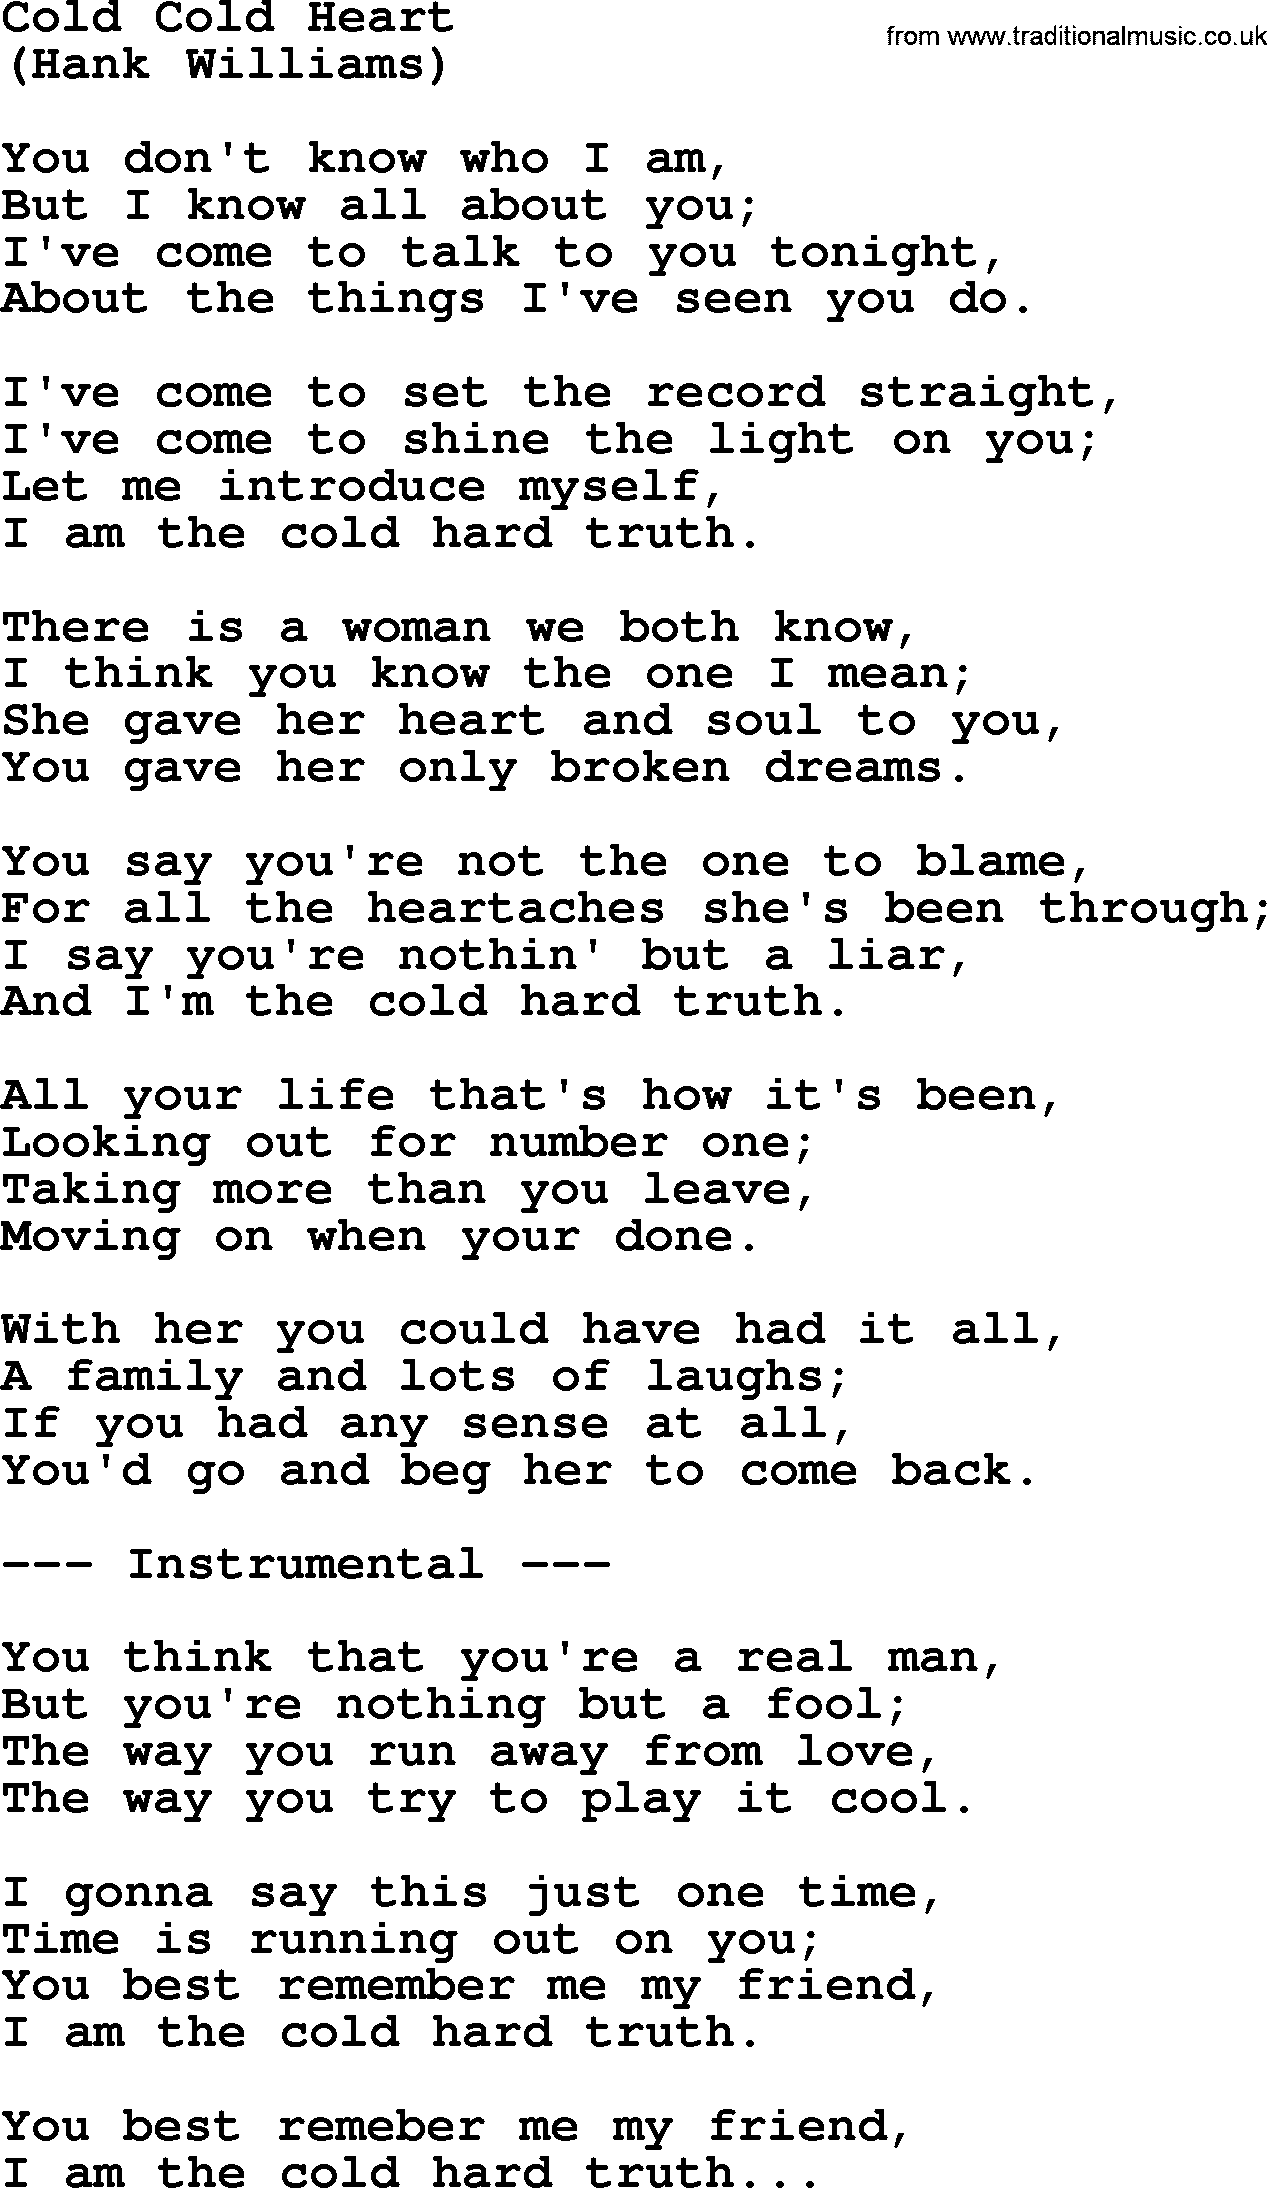 George Jones song: Cold Cold Heart, lyrics